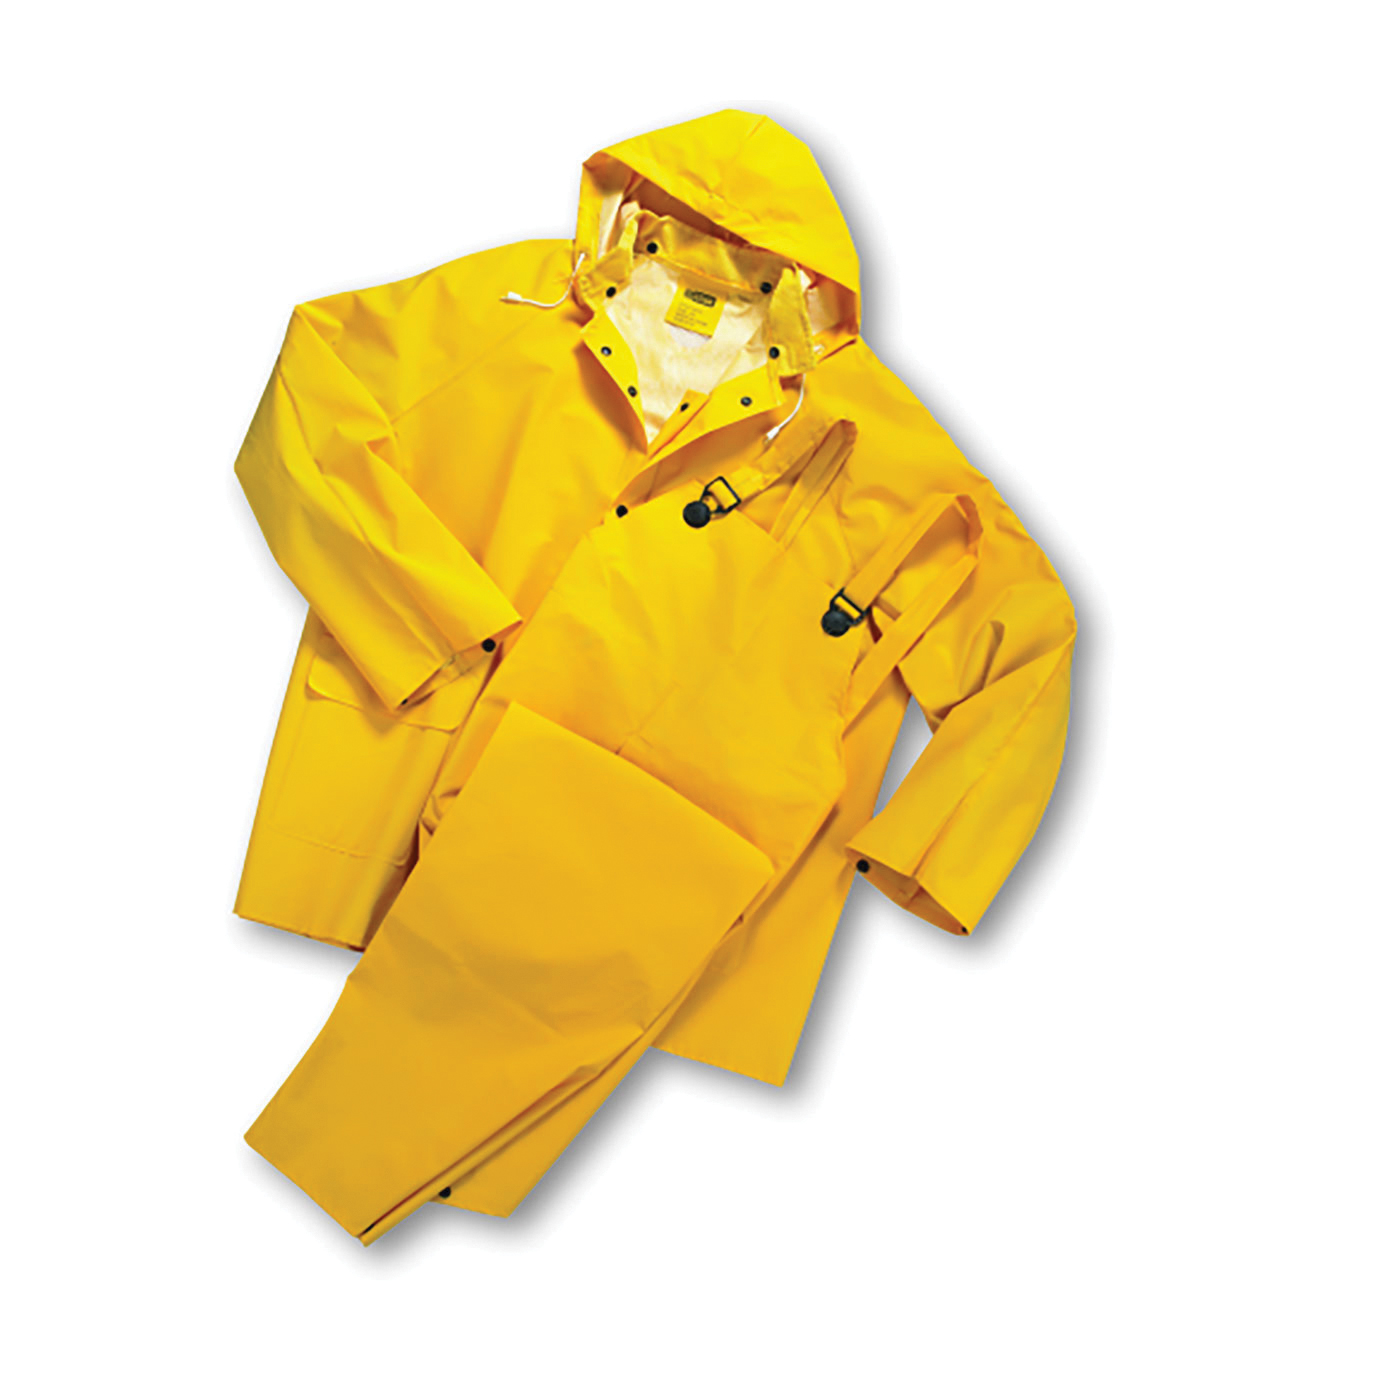 PIP® 4035/XXXXXL 3-Piece Rainsuit, 5XL, Yellow, Polyester/PVC, 58 in Waist, 33 in L Inseam, Drawstring Hood